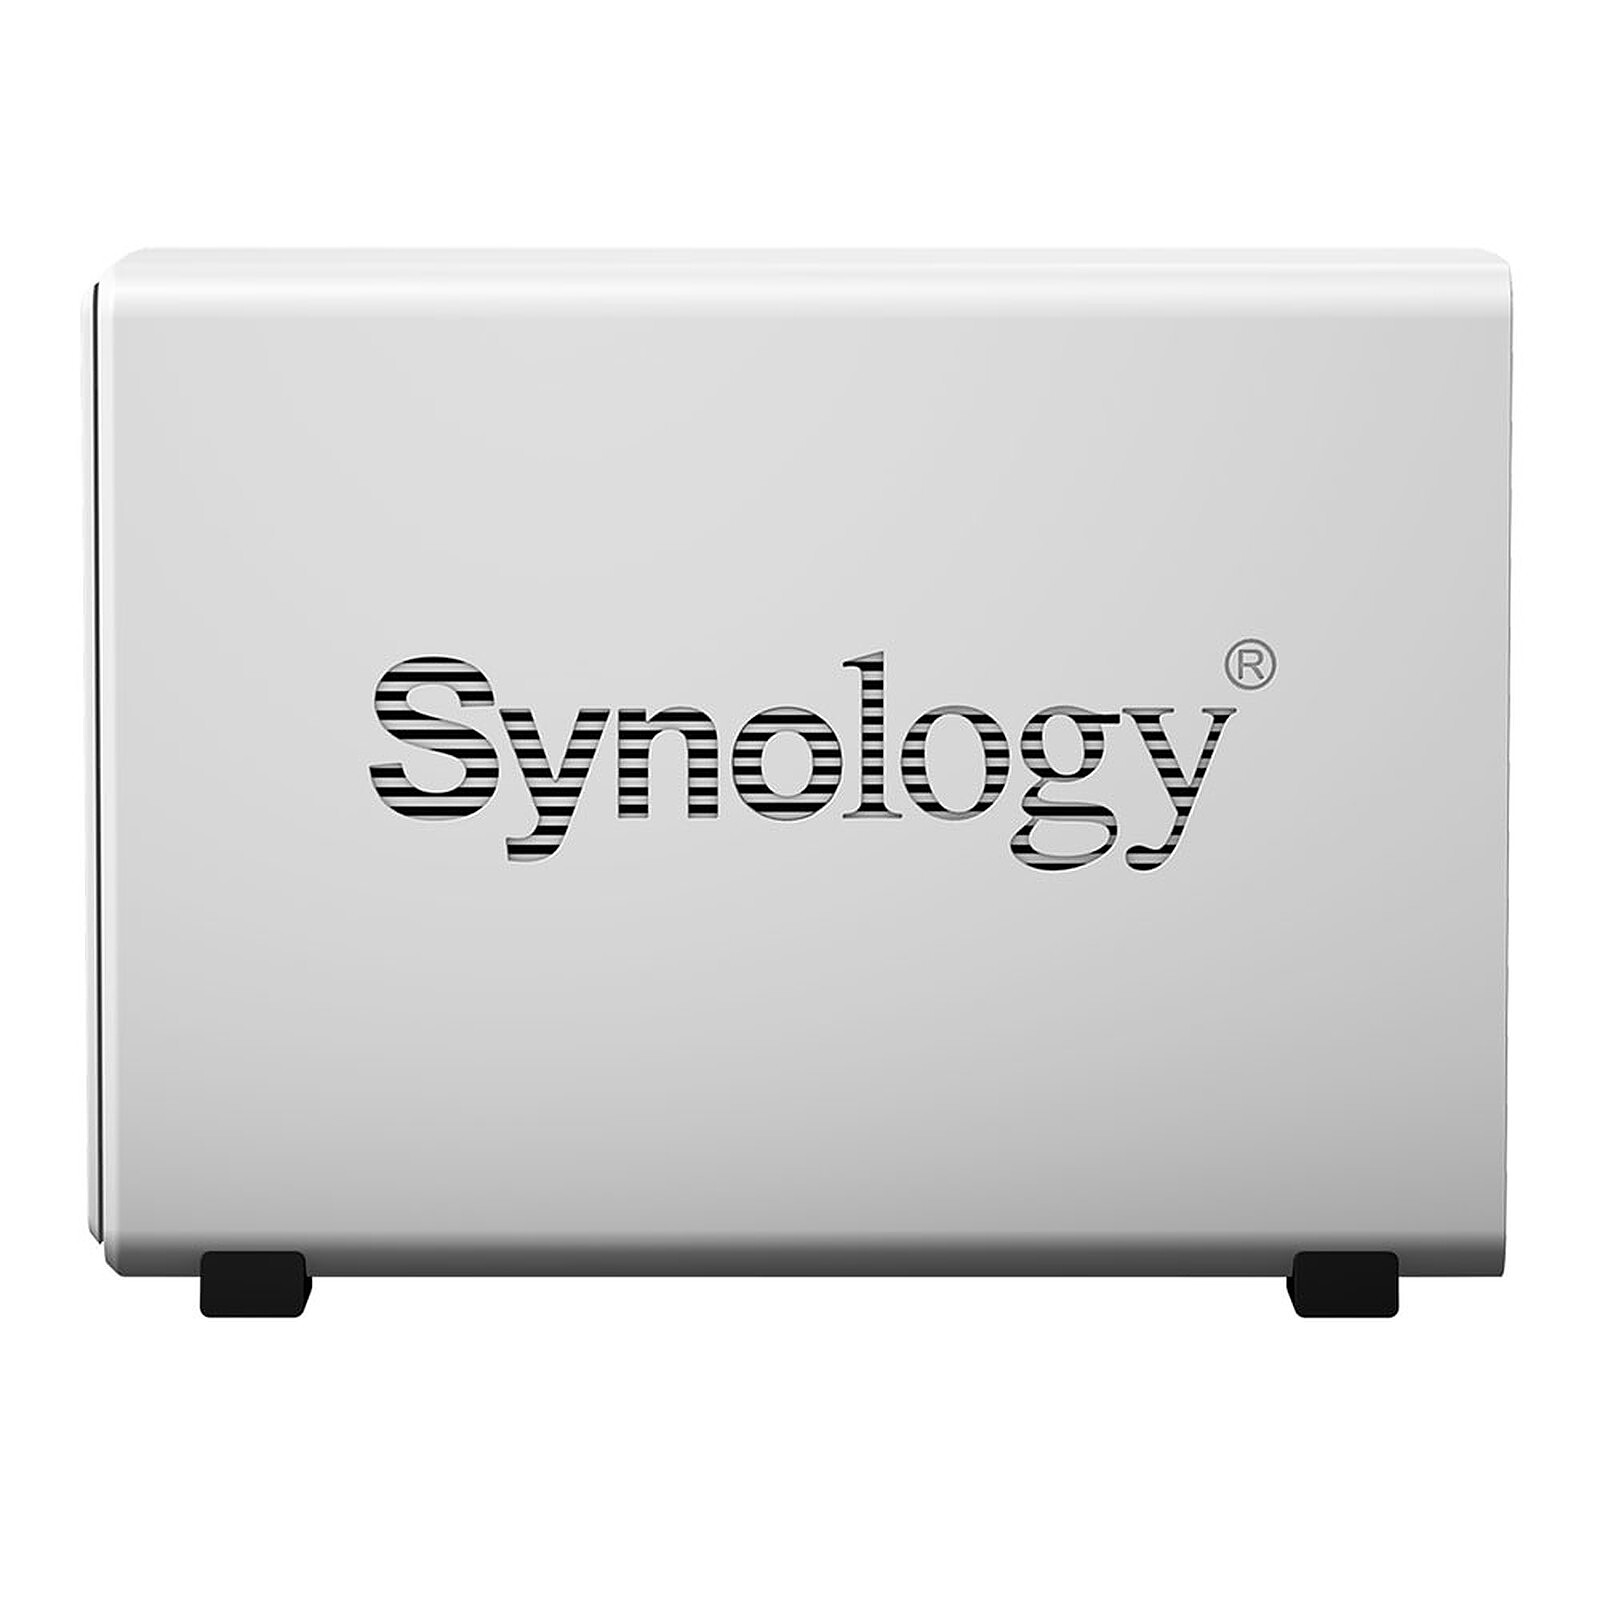 Synology DS923+ NAS 4 Baies - Stockage Avancé et Polyvalent